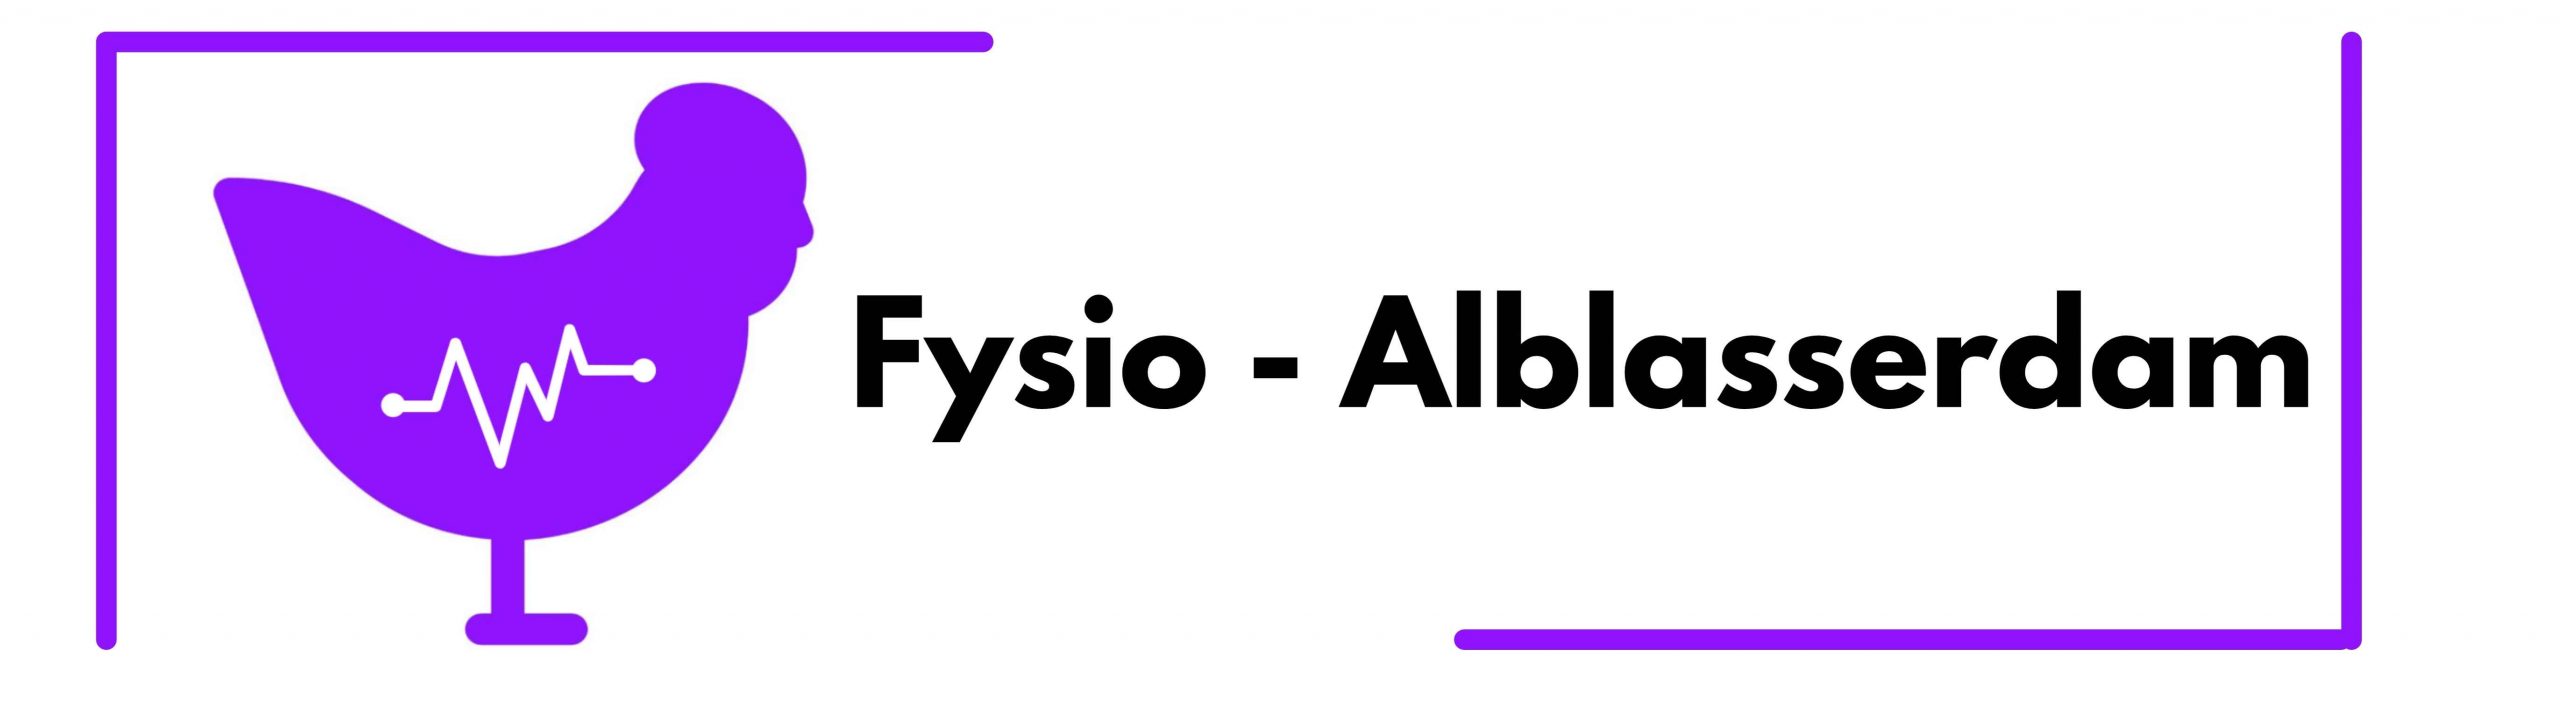 Fysio alblasserdam logo